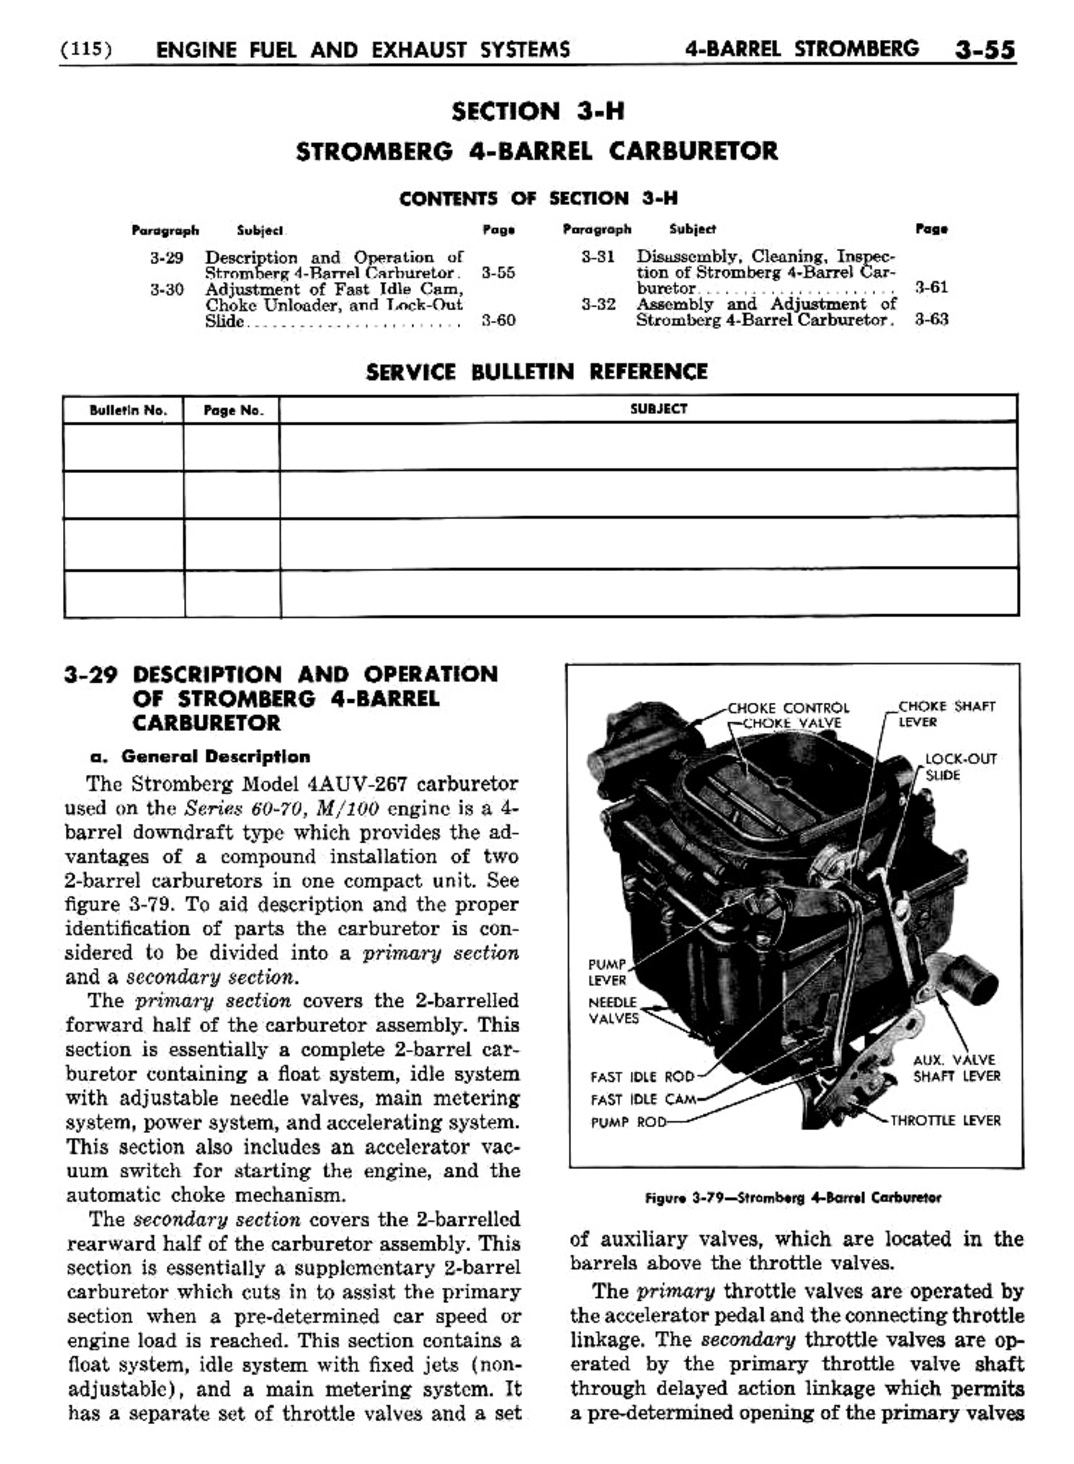 n_04 1954 Buick Shop Manual - Engine Fuel & Exhaust-055-055.jpg